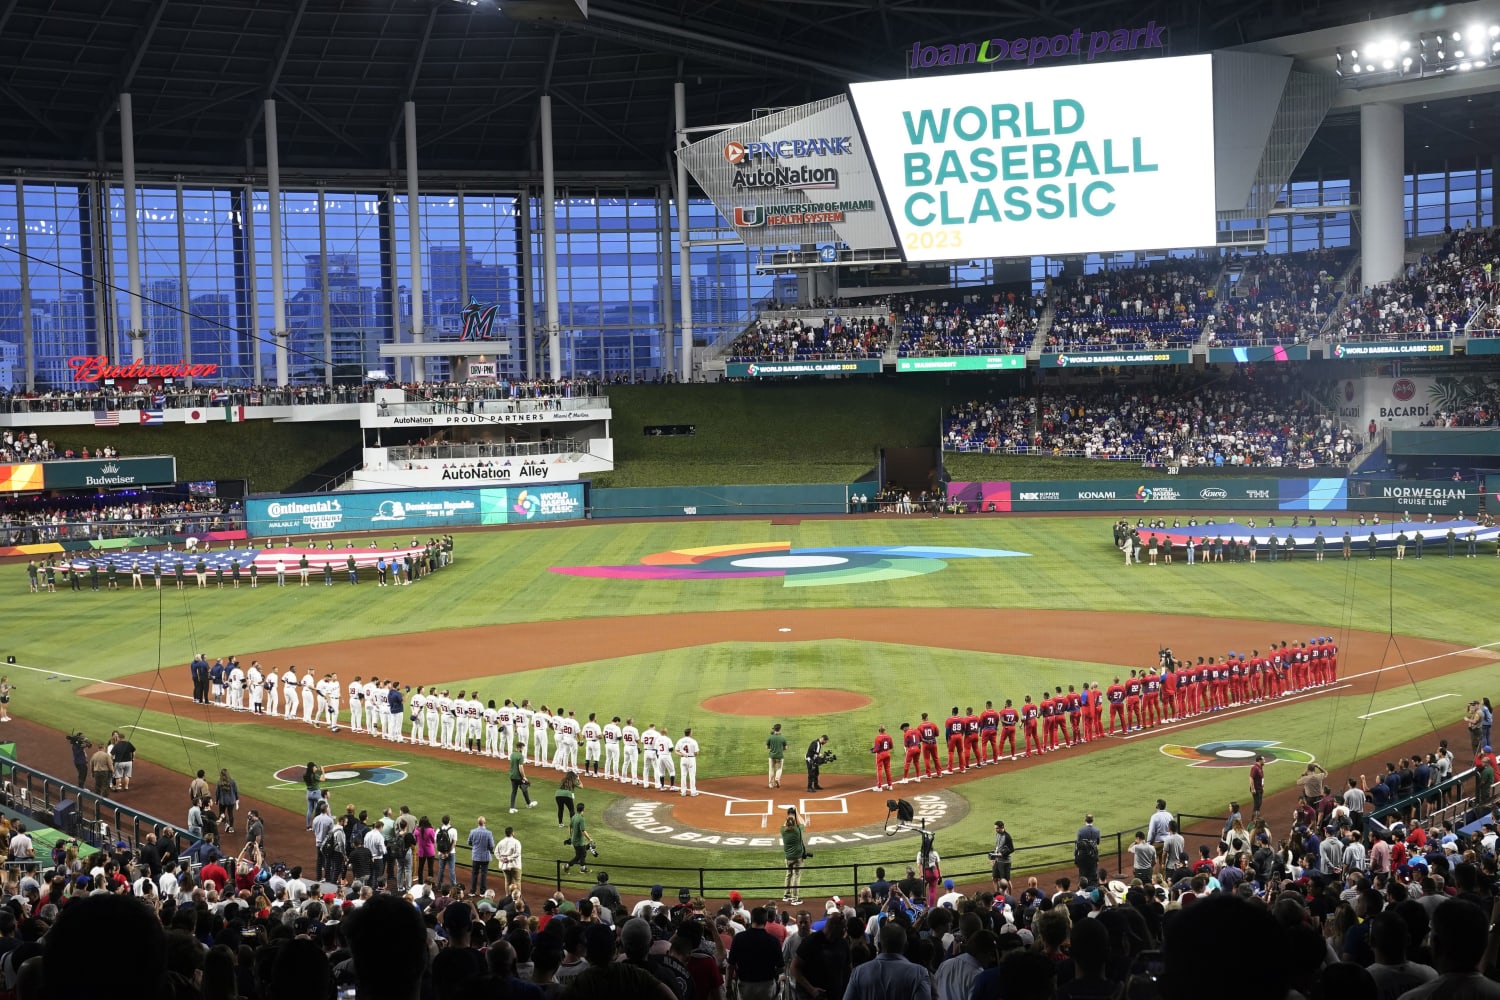 Rays star calls out Cuba at World Baseball Classic